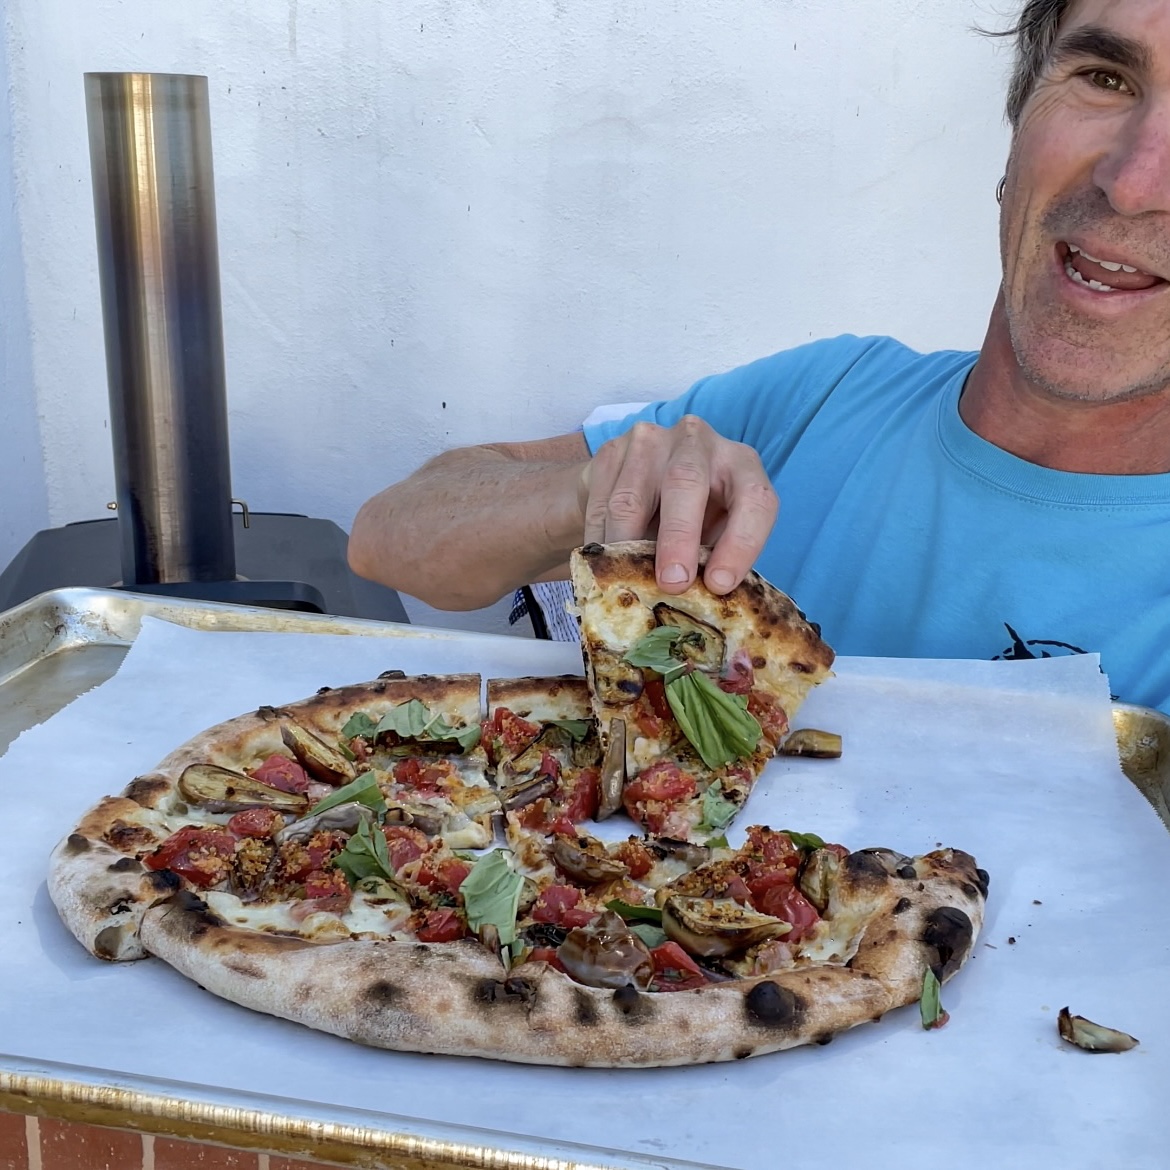 The Best Pizza Making Surfaces - Santa Barbara Baker